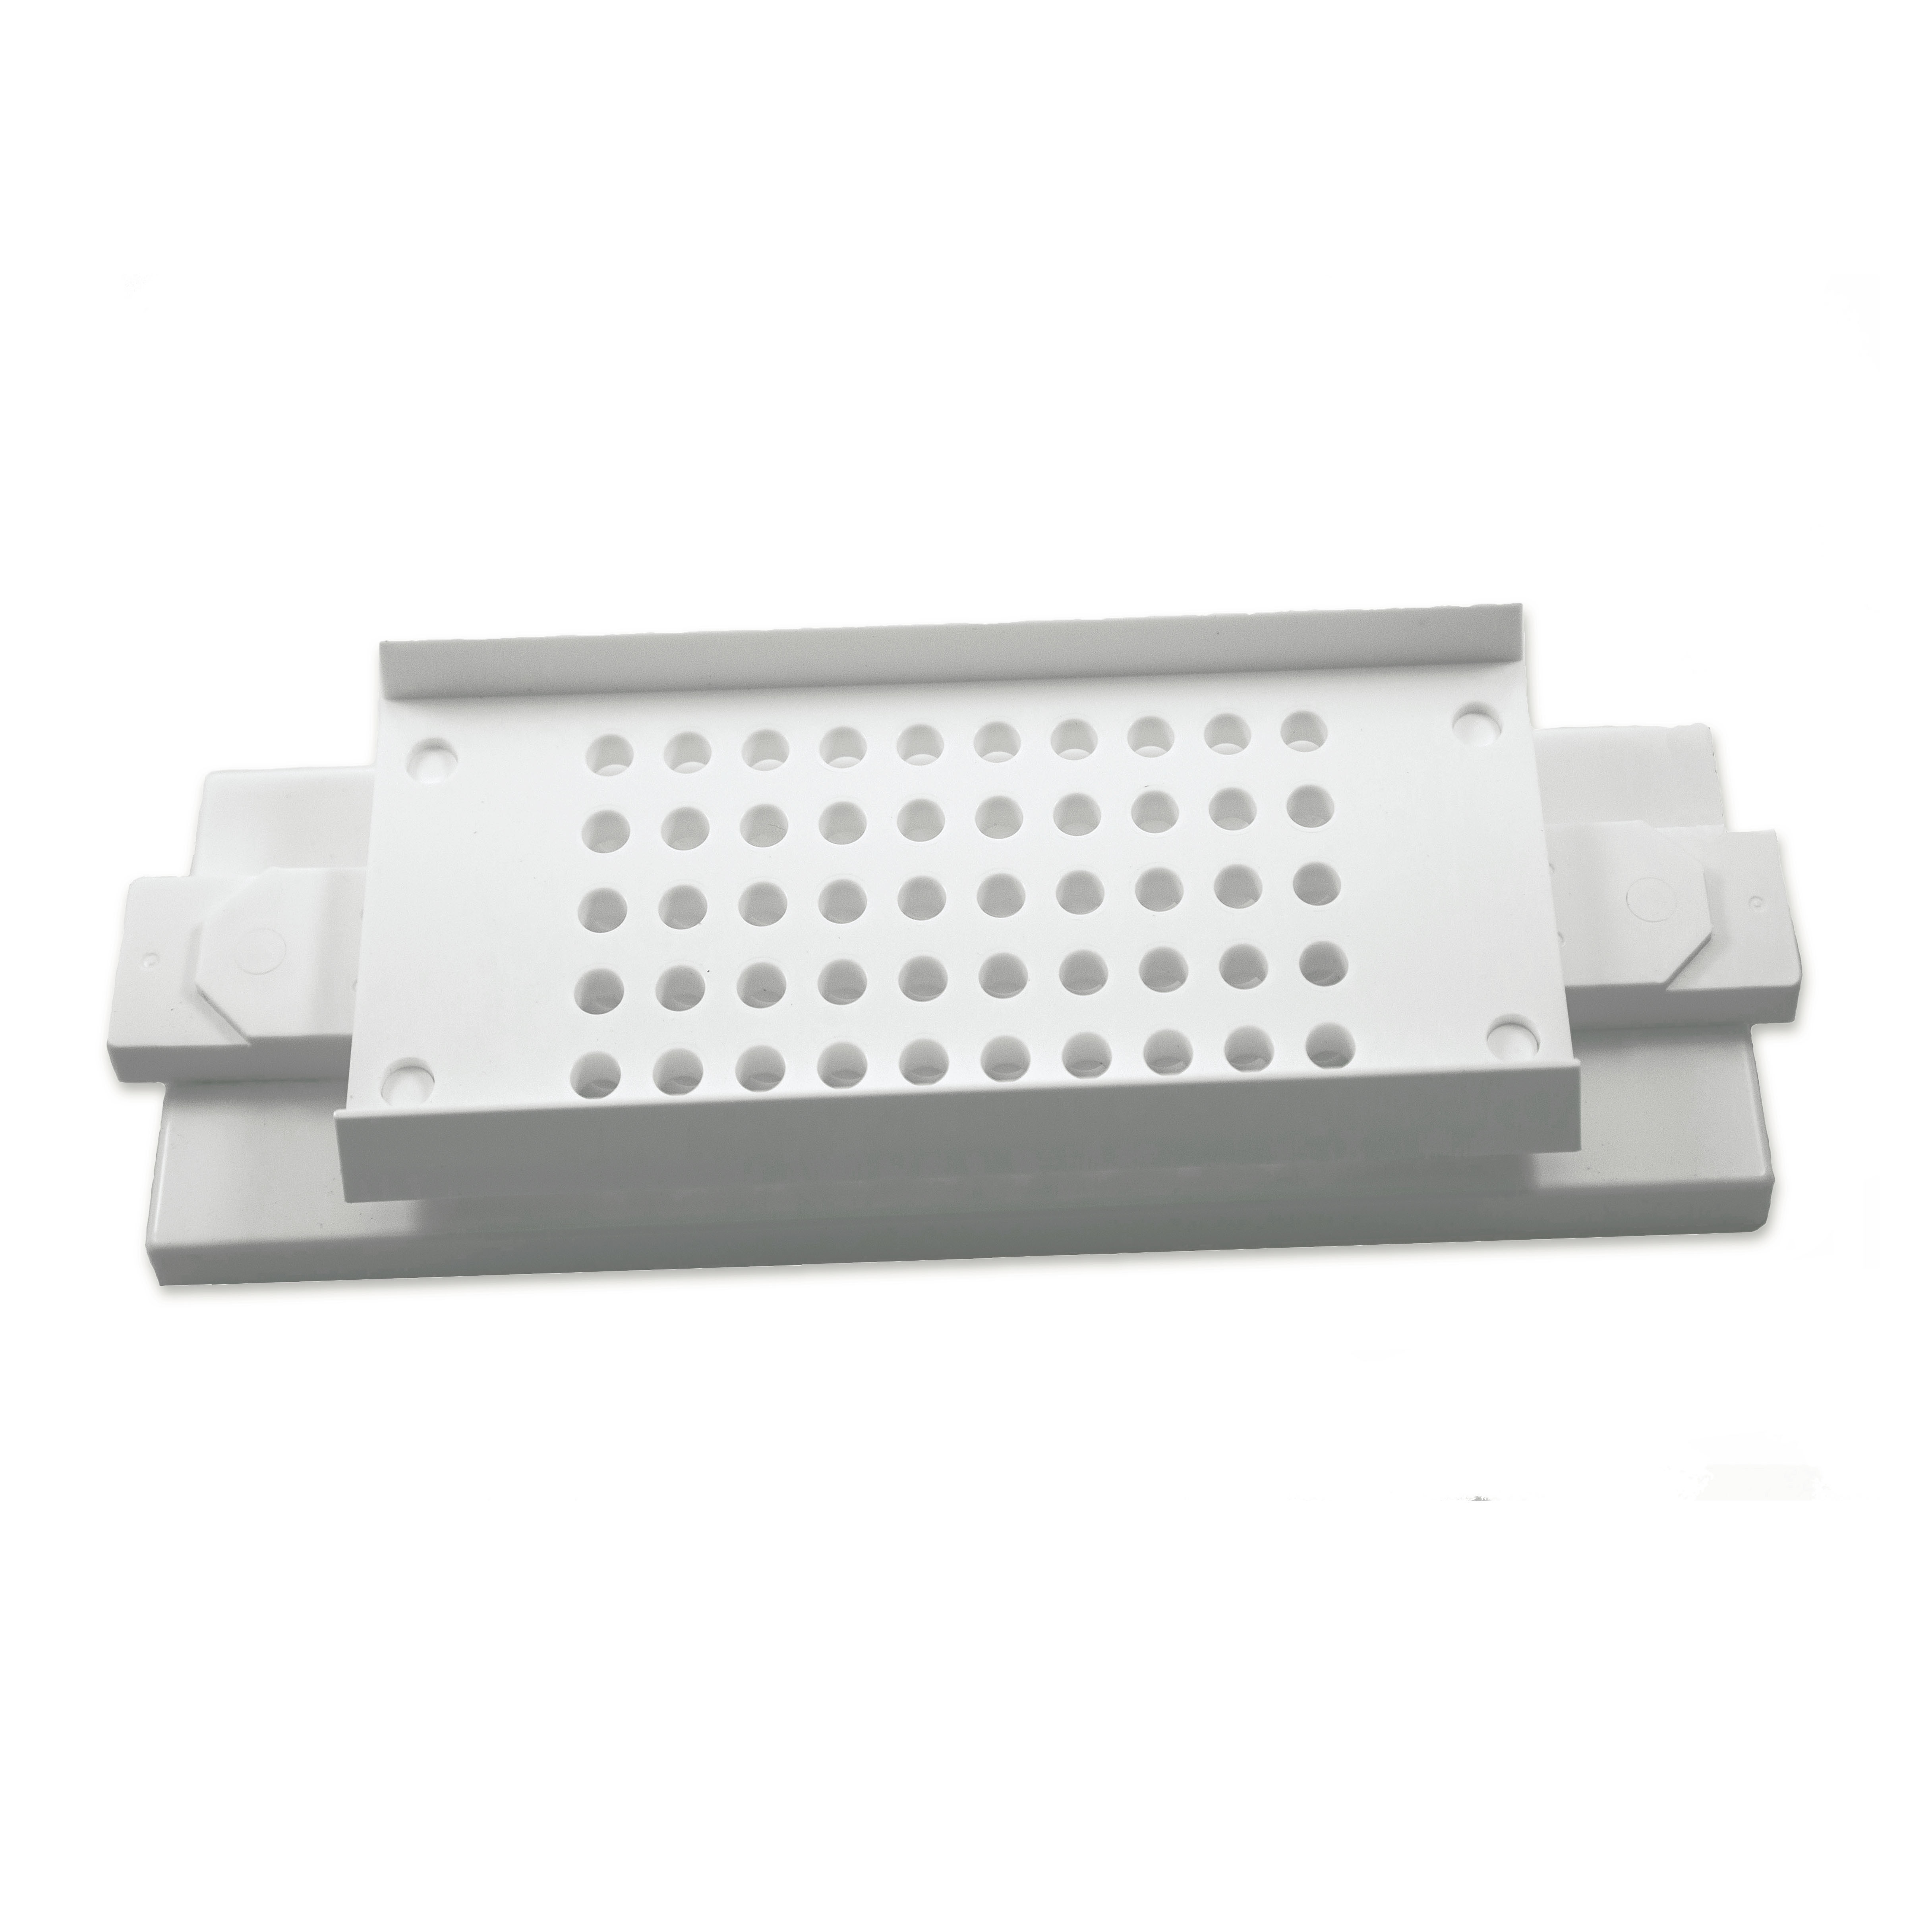 Manual Encapsulator For “00” Capsules